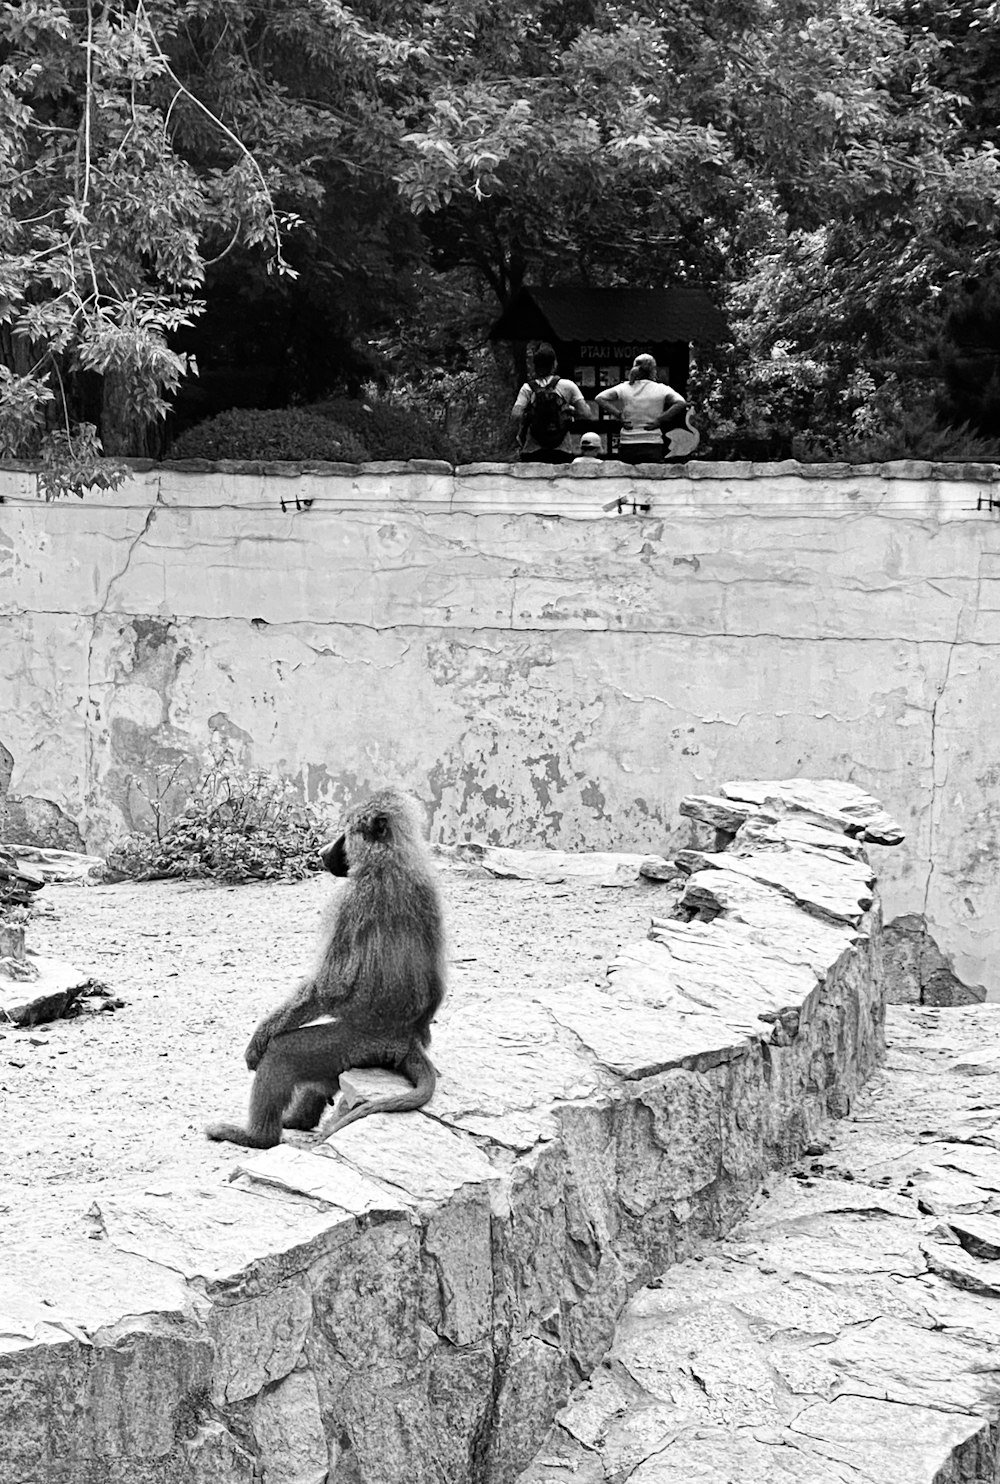 a monkey is sitting on a rock ledge